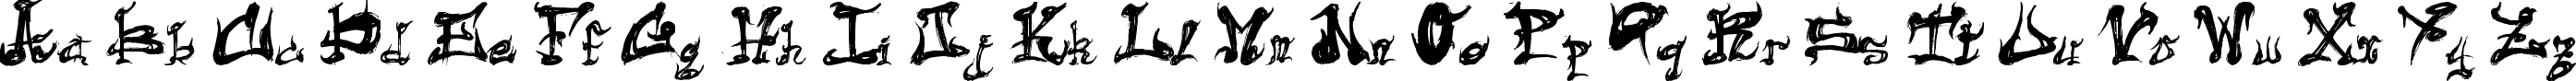 Пример написания английского алфавита шрифтом Dark Flame